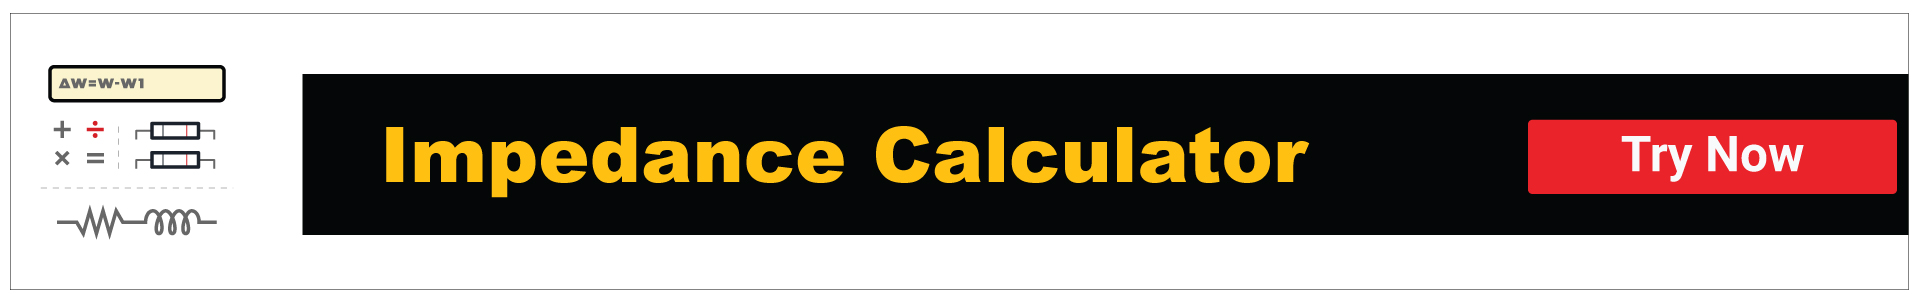 impedance-calculator-blog-banner.jpg